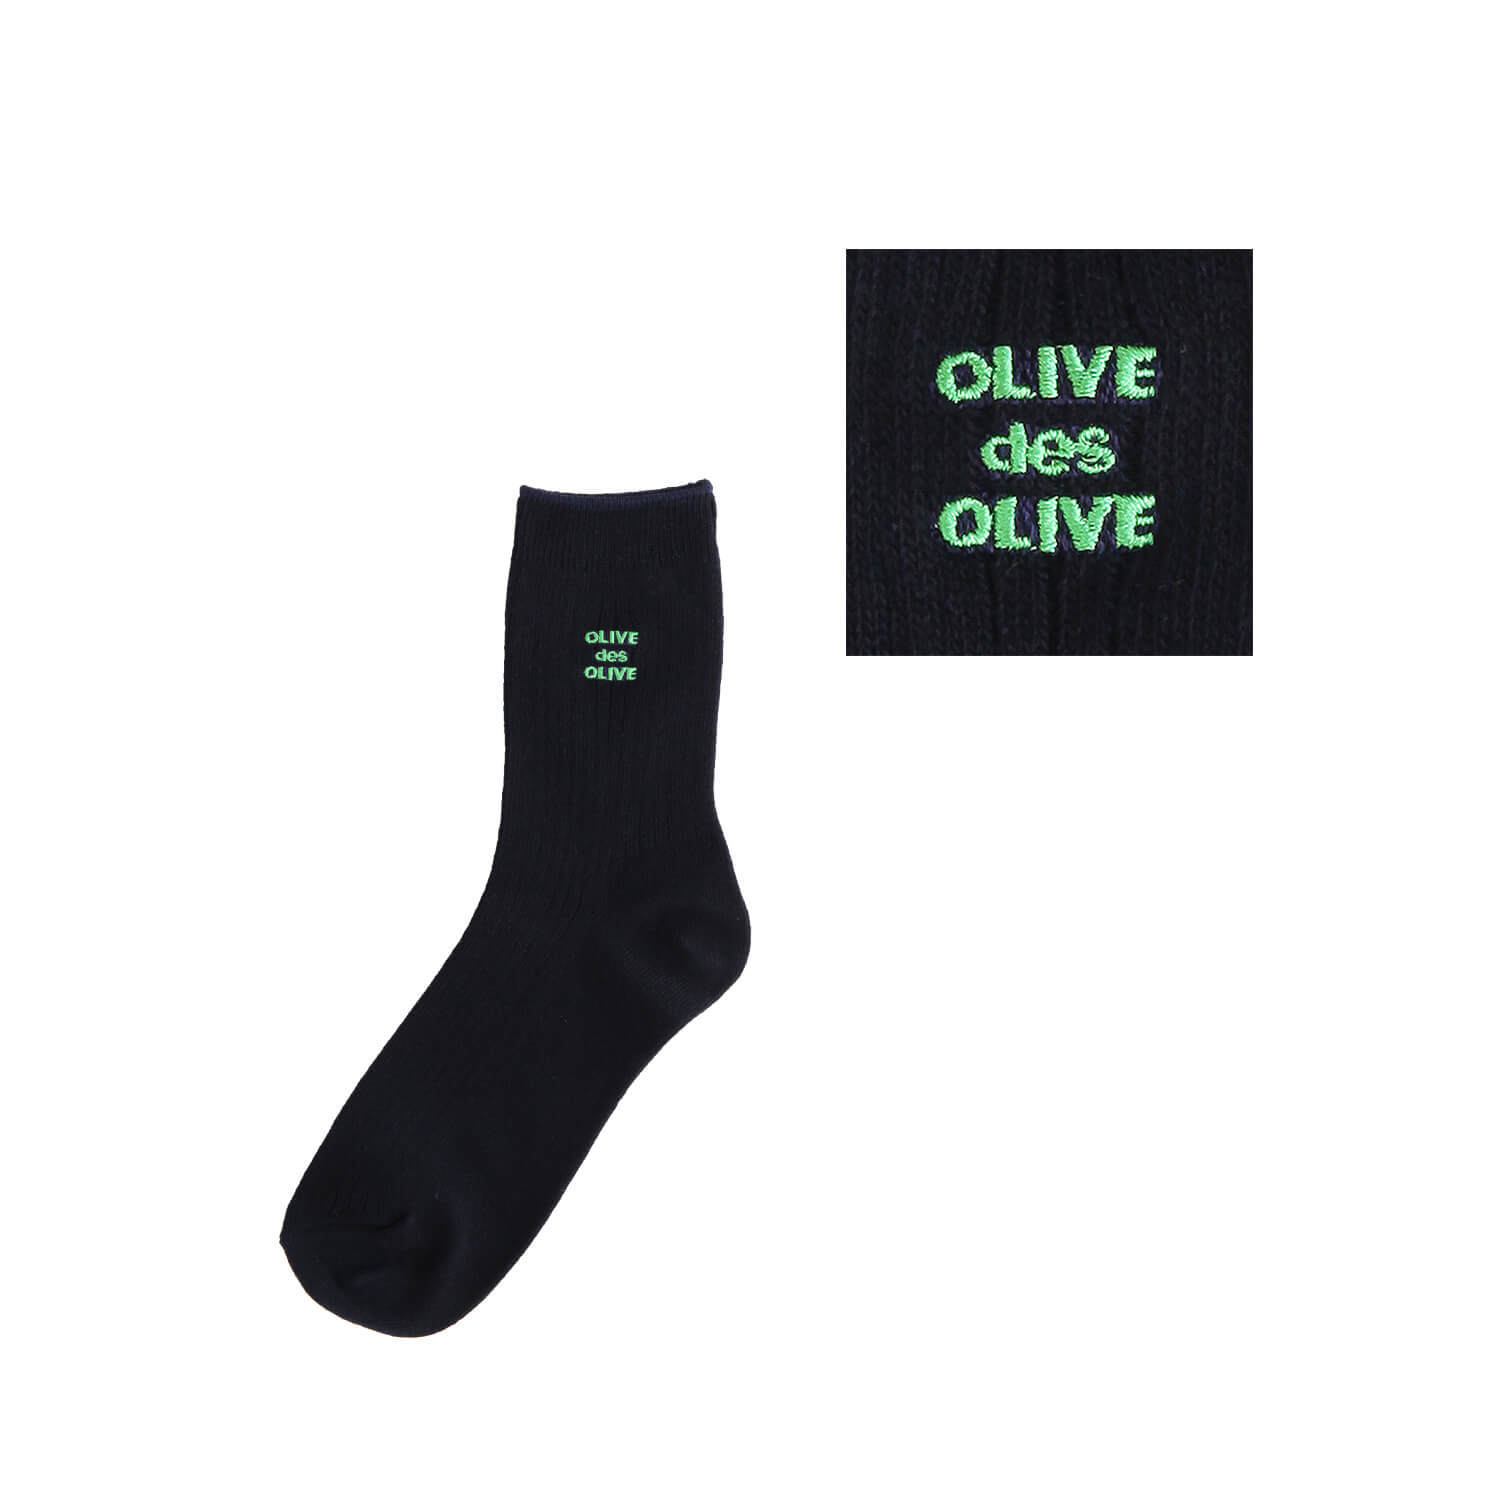 OLIVE des OLIVEのポップなロゴ刺繍入りのレギュラーソックス。刺繍カラー-45緑